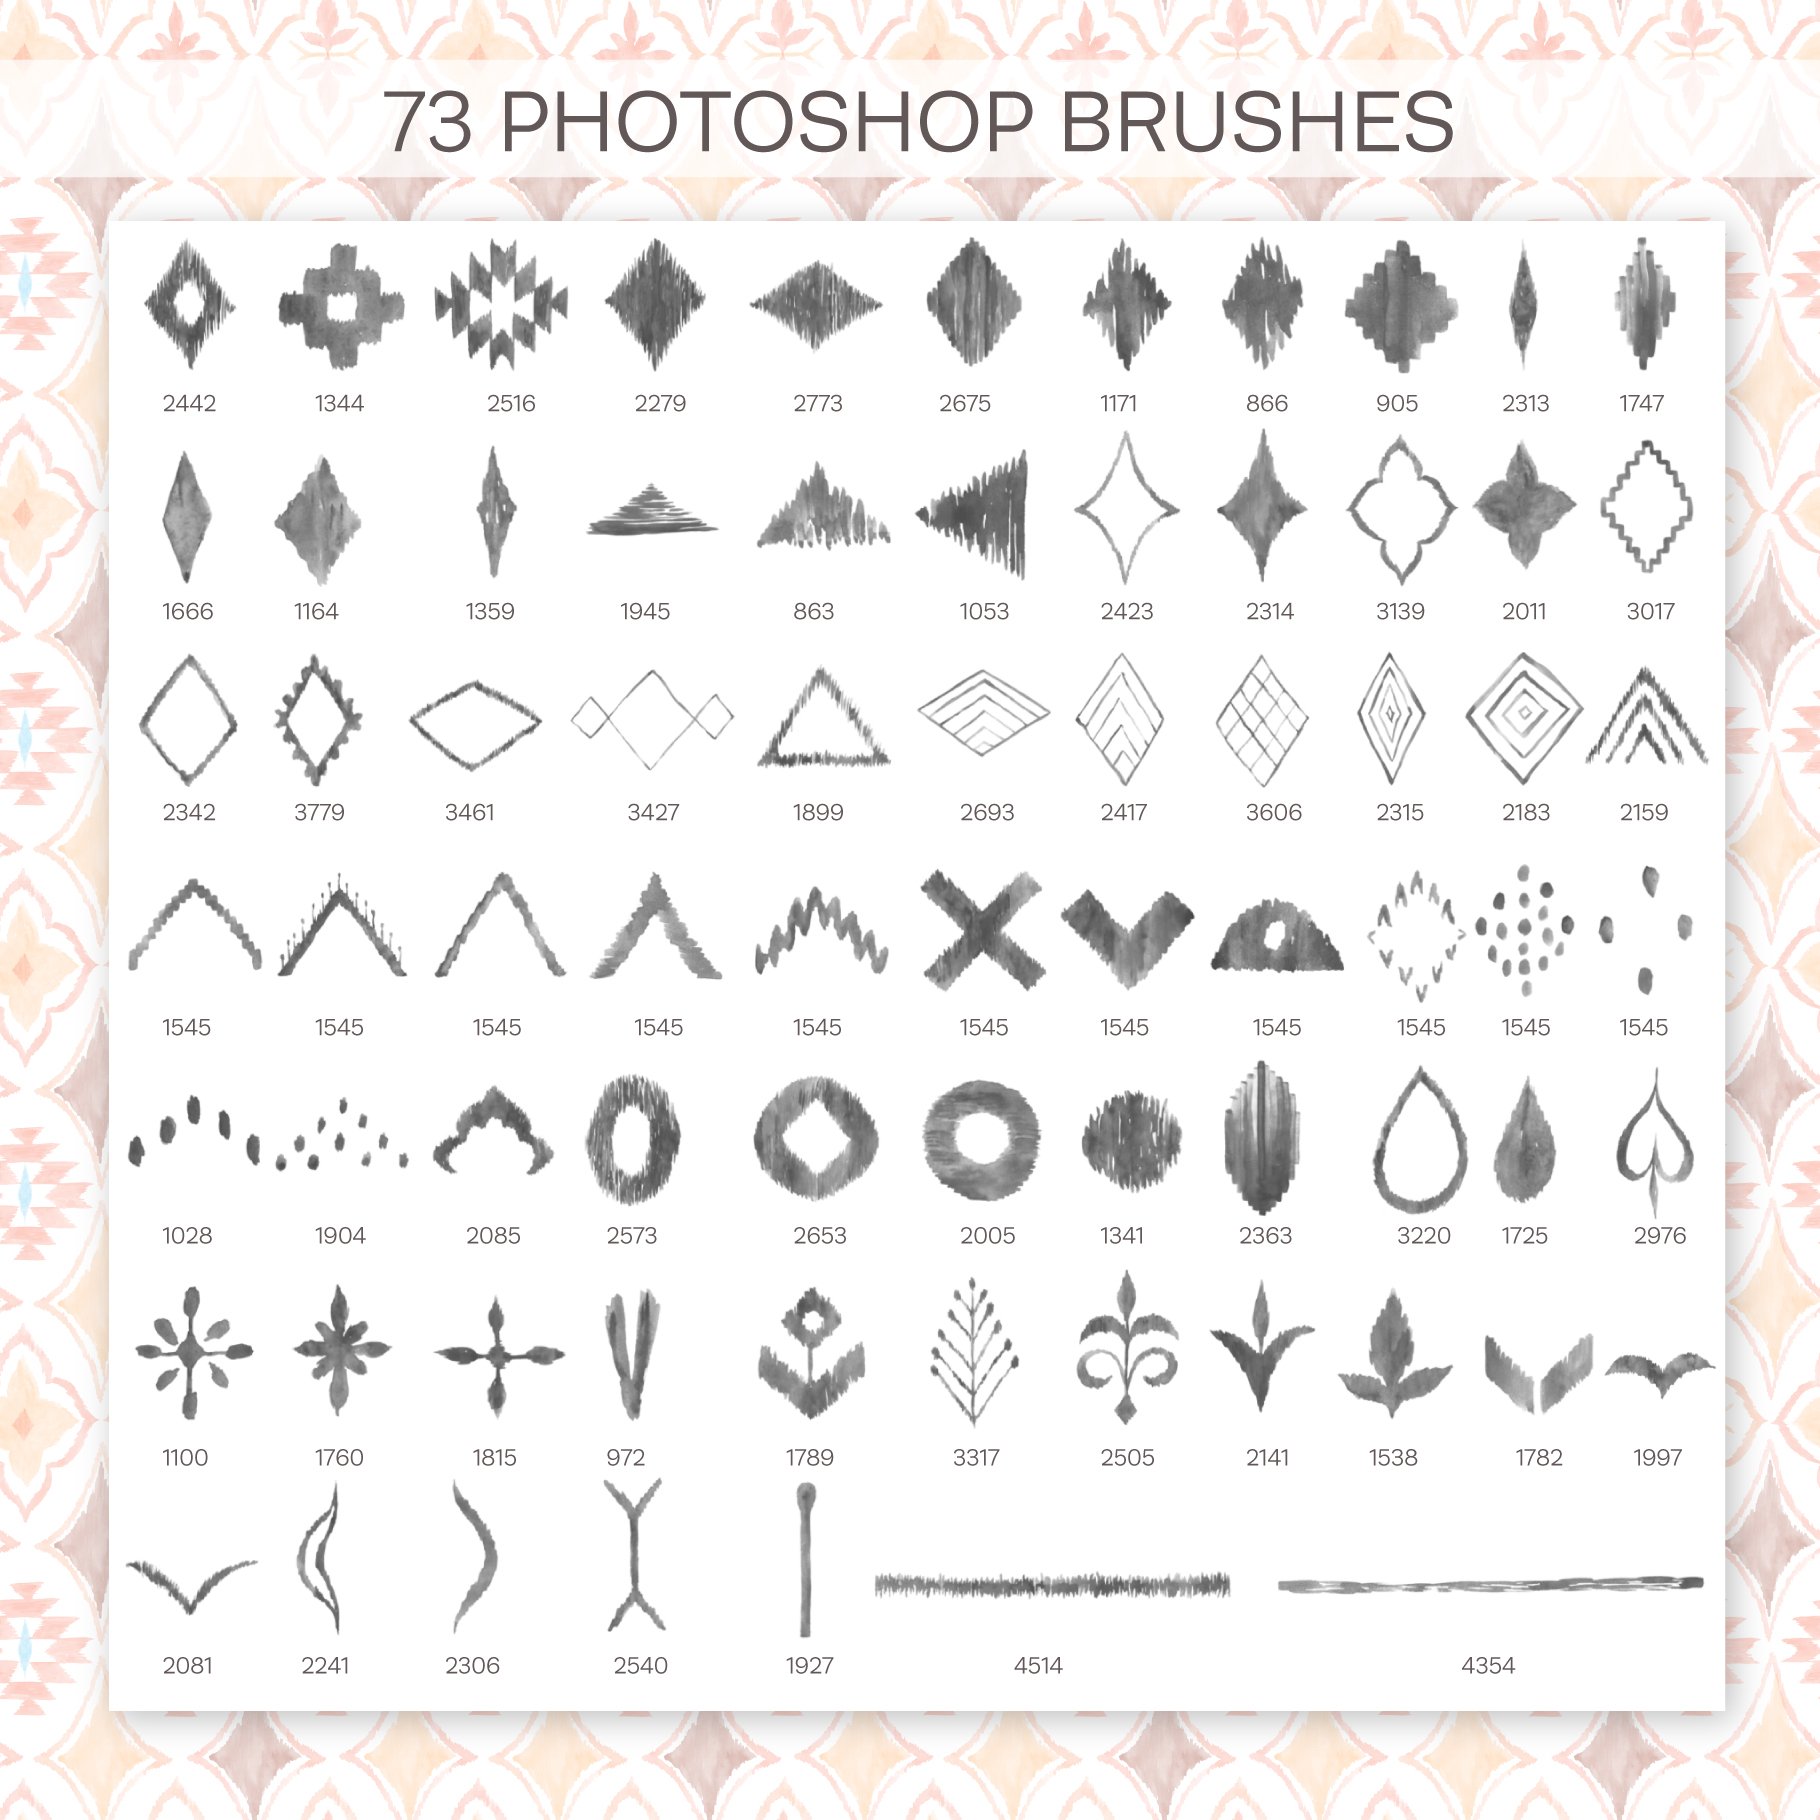 ikat stamp brushes8 33